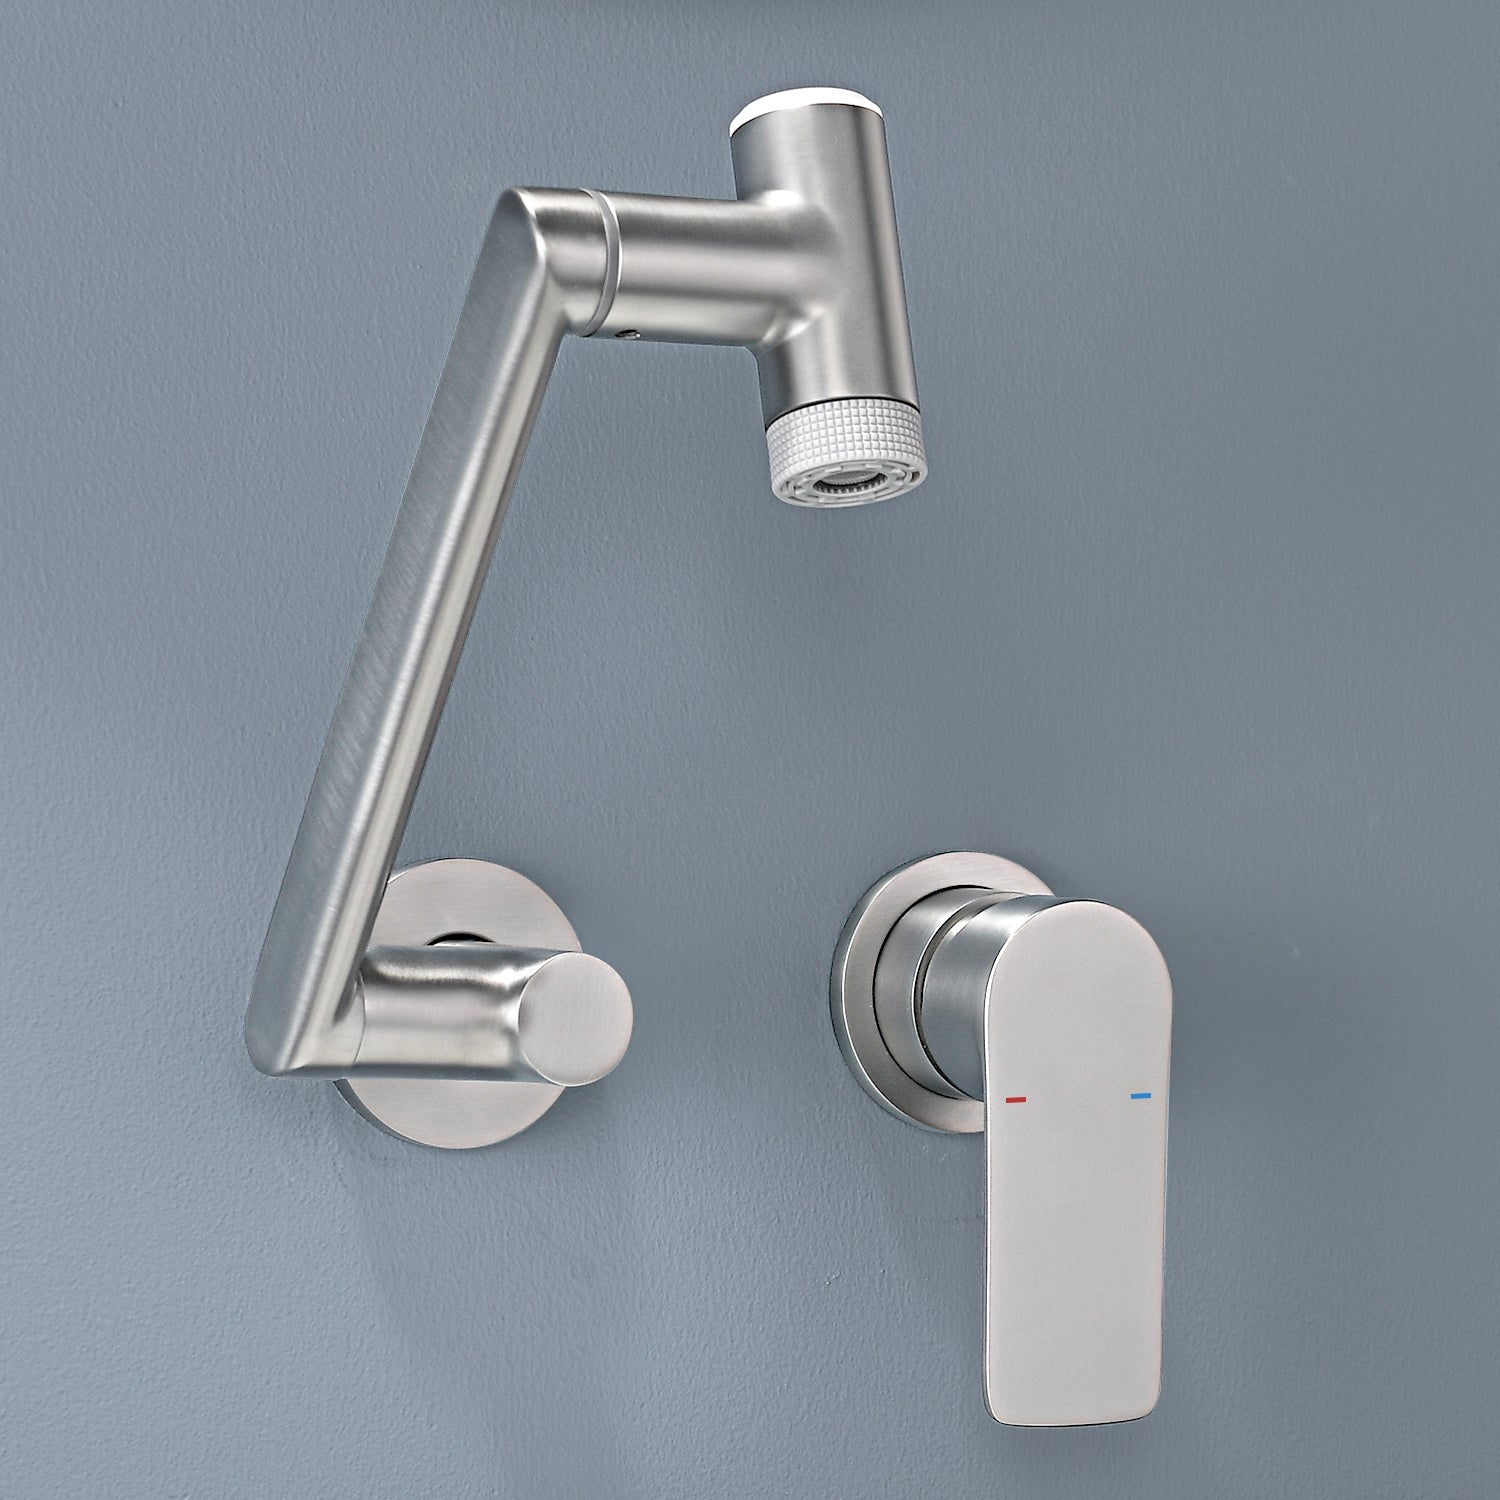 Lefton Single-Handle Wall Mount Bathroom Faucet with Temperature Display-BFWM2401 -Bathroom Faucets- Lefton Home